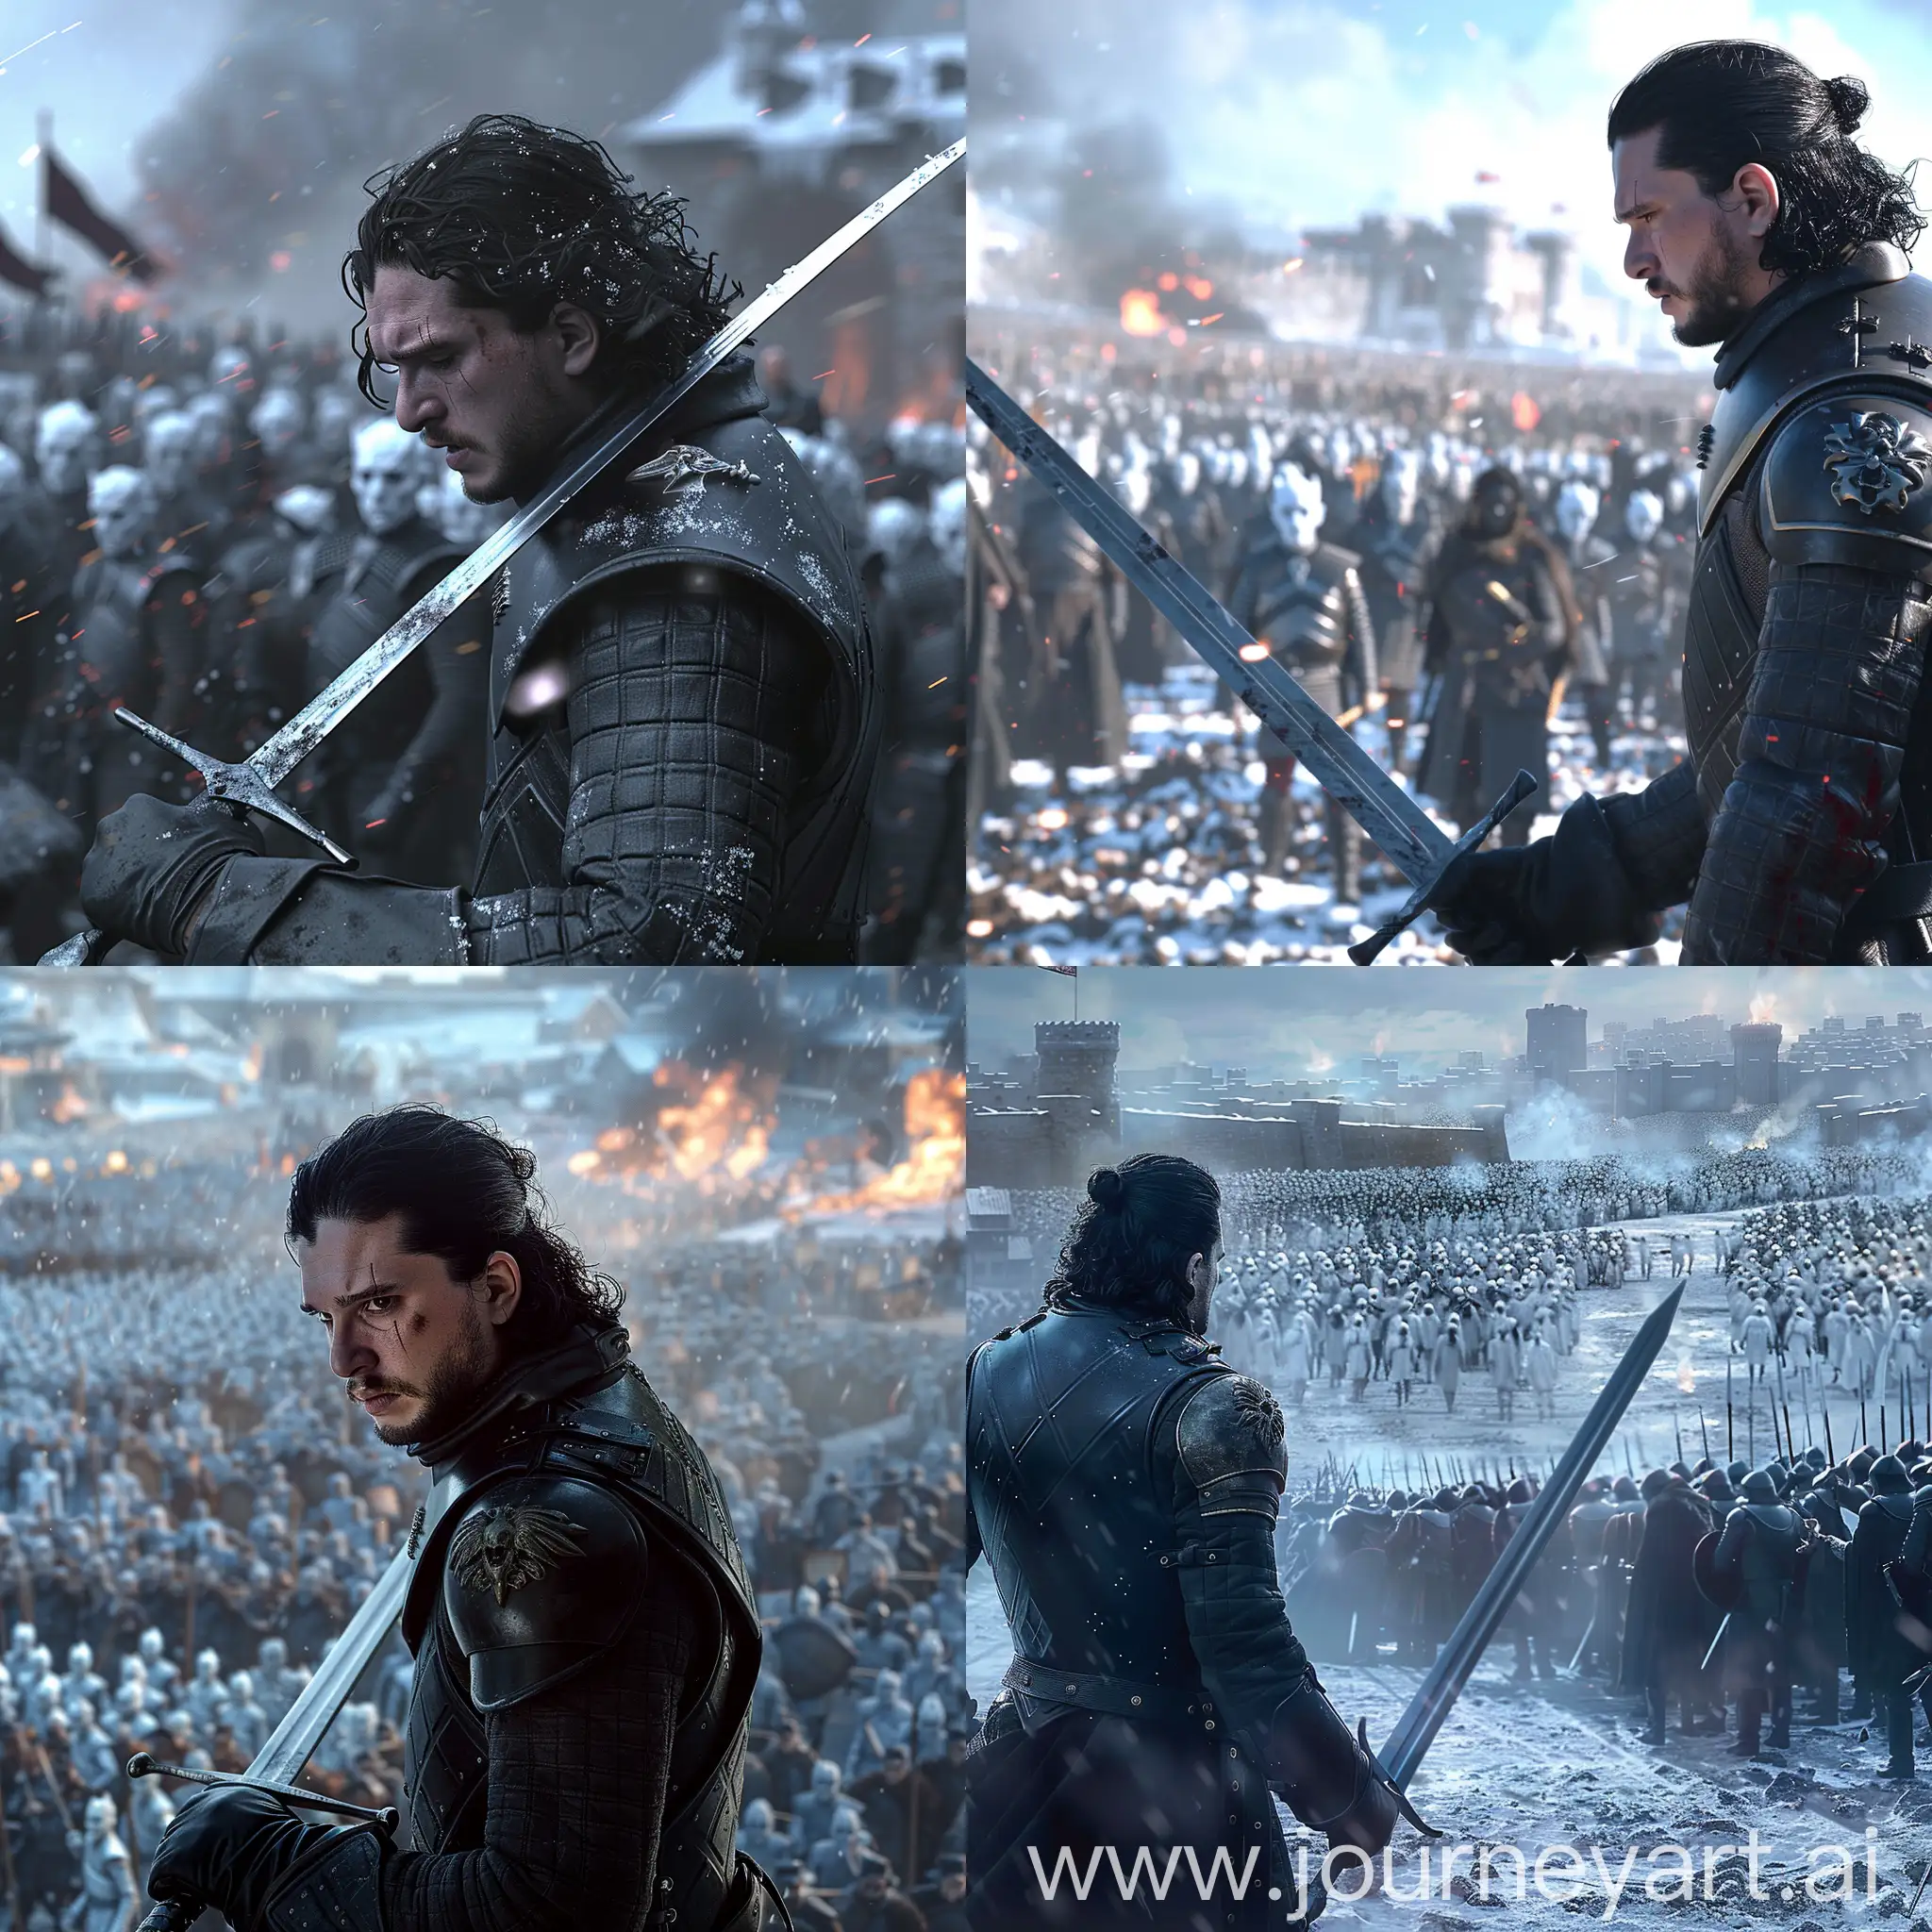 Epic-Battle-Jon-Snow-Confronts-White-Walkers-in-Kings-Landing